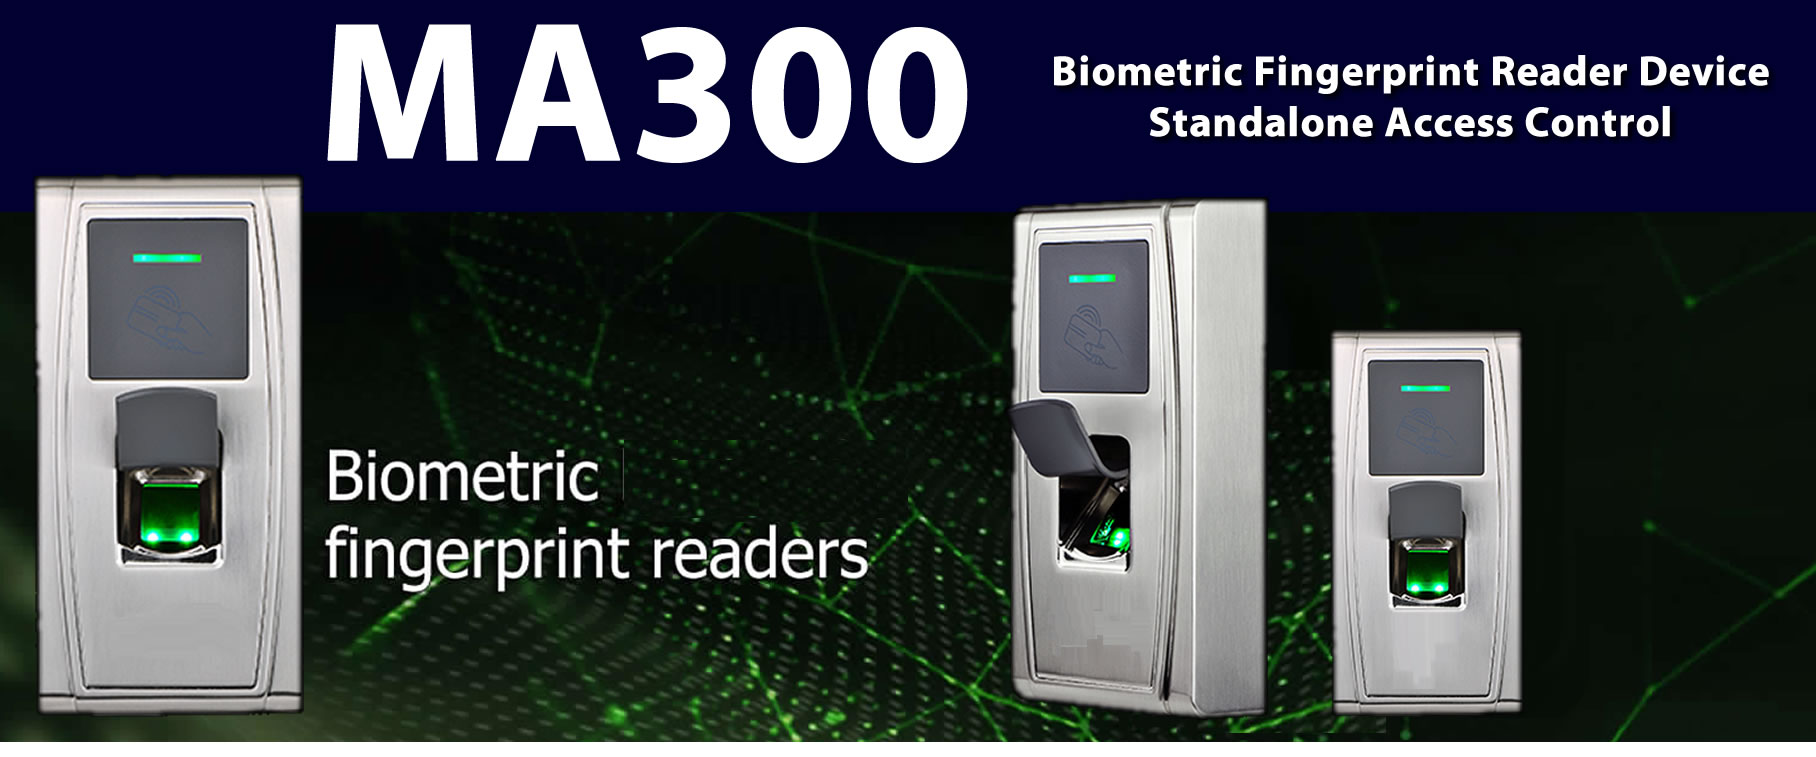 ma300 biometric Fingerprint reader device